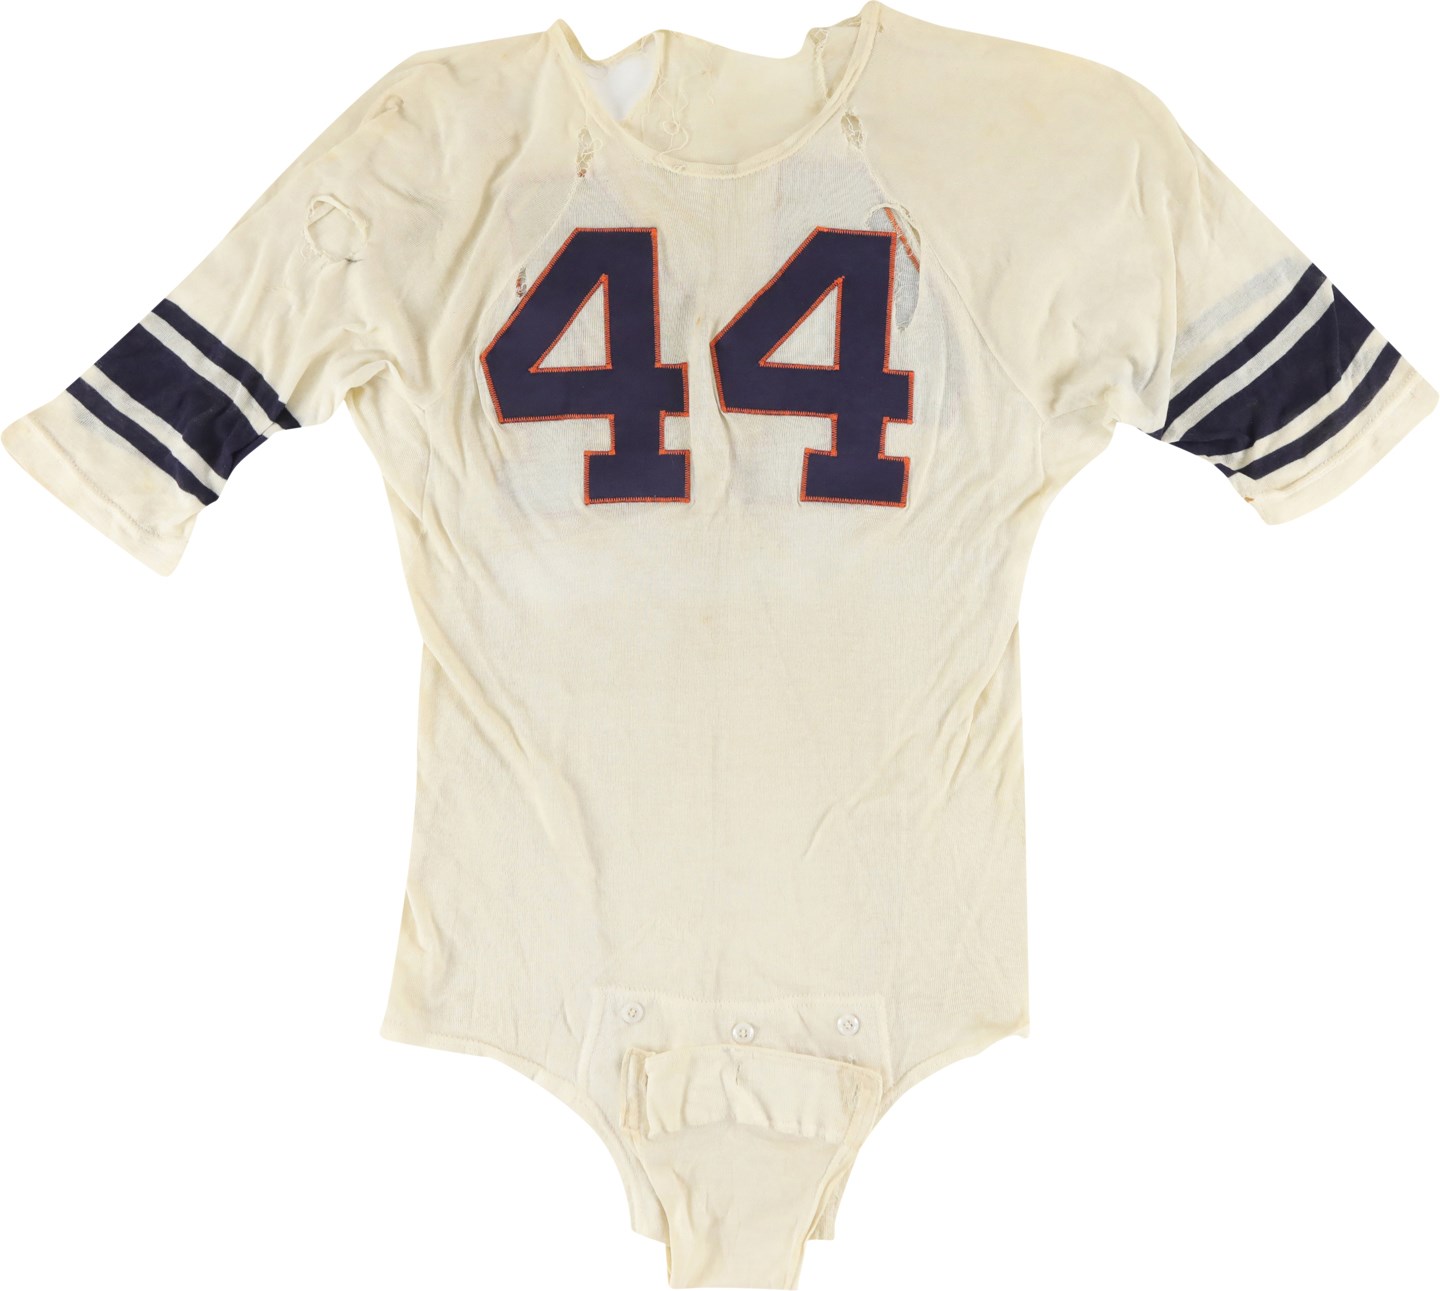 - 10/1/60 Ernie Davis Photo-Matched Syracuse University Game Worn Jersey vs. Kansas (Resolution Photomatching LOA)